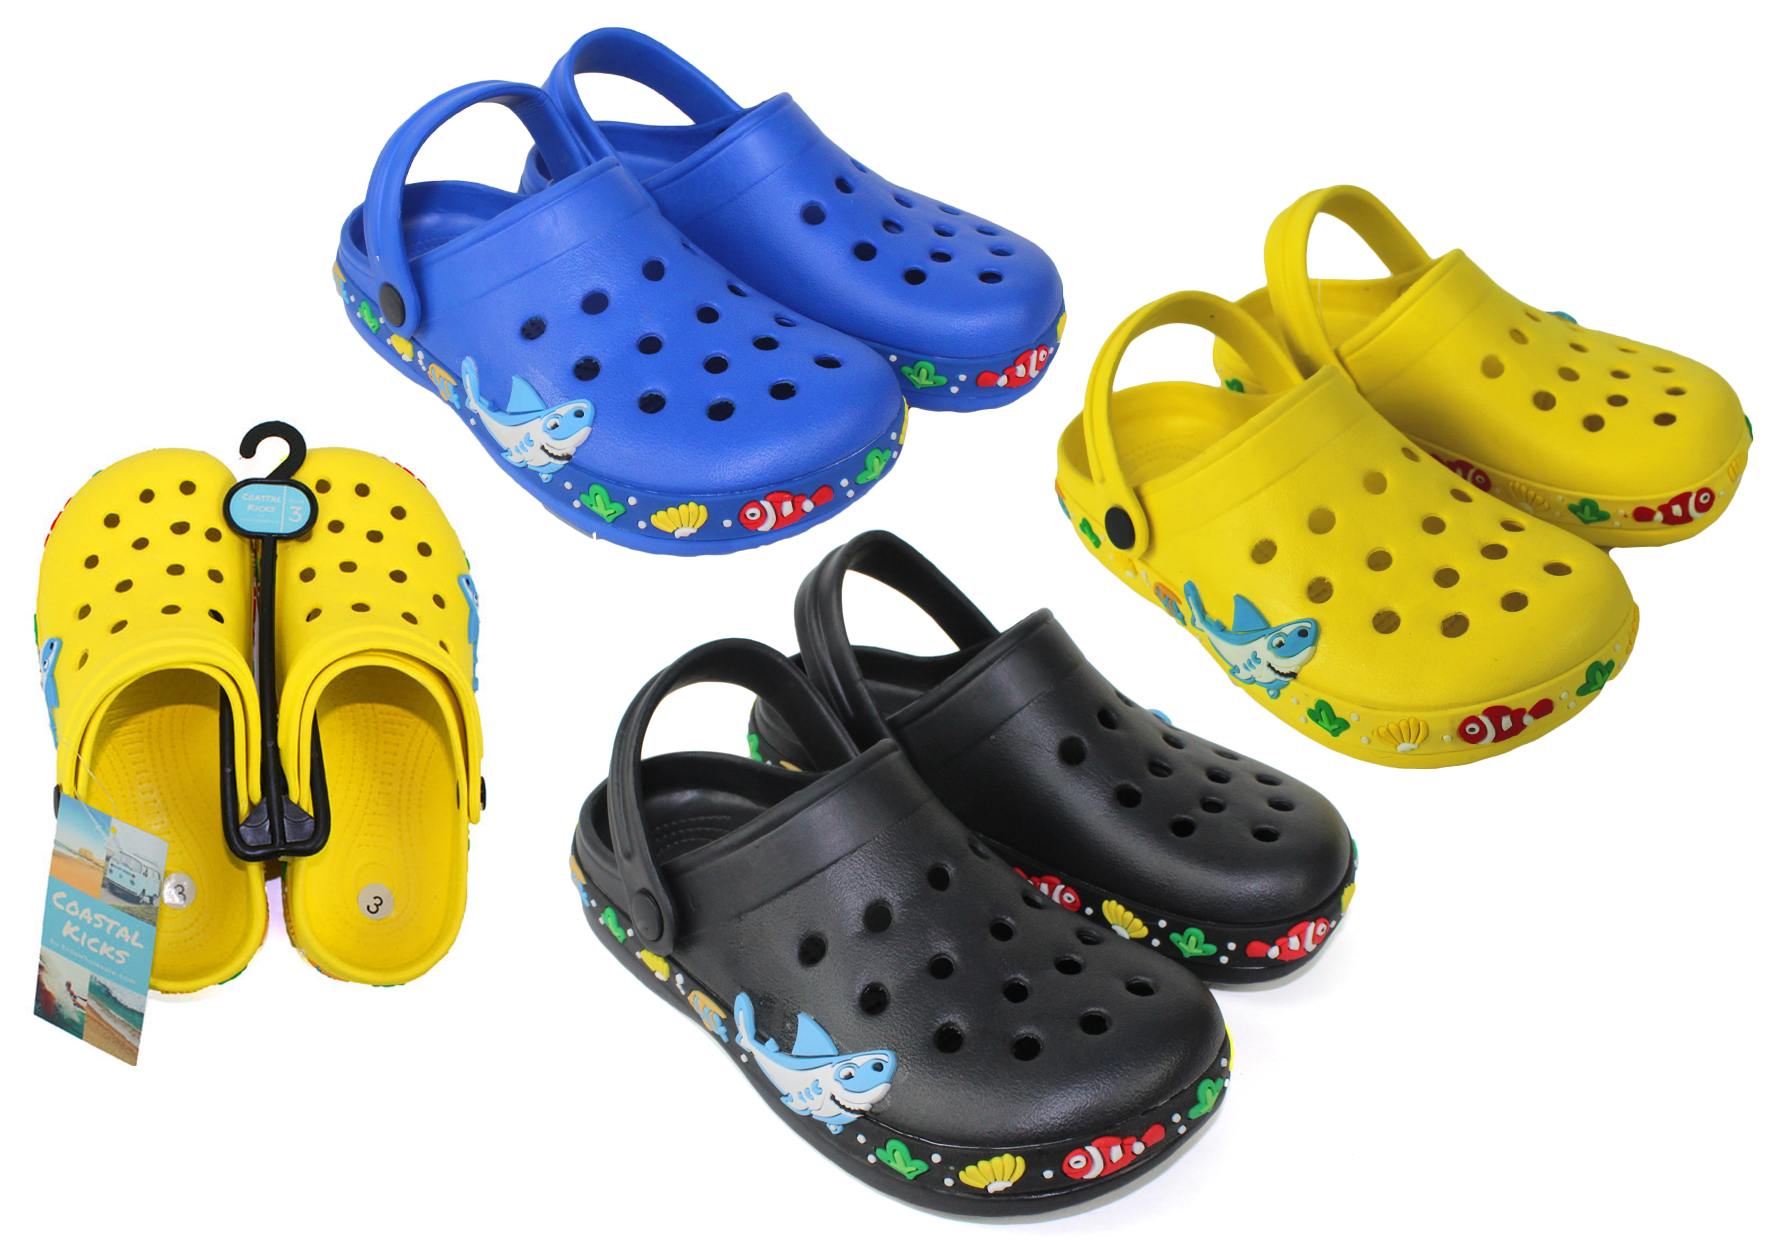  Happy Feet Slippers Standard Sneaker Slippers for Men, Women,  and Kids - Women Shoes, Gifts for Women, As Seen on Shark Tank - Classy